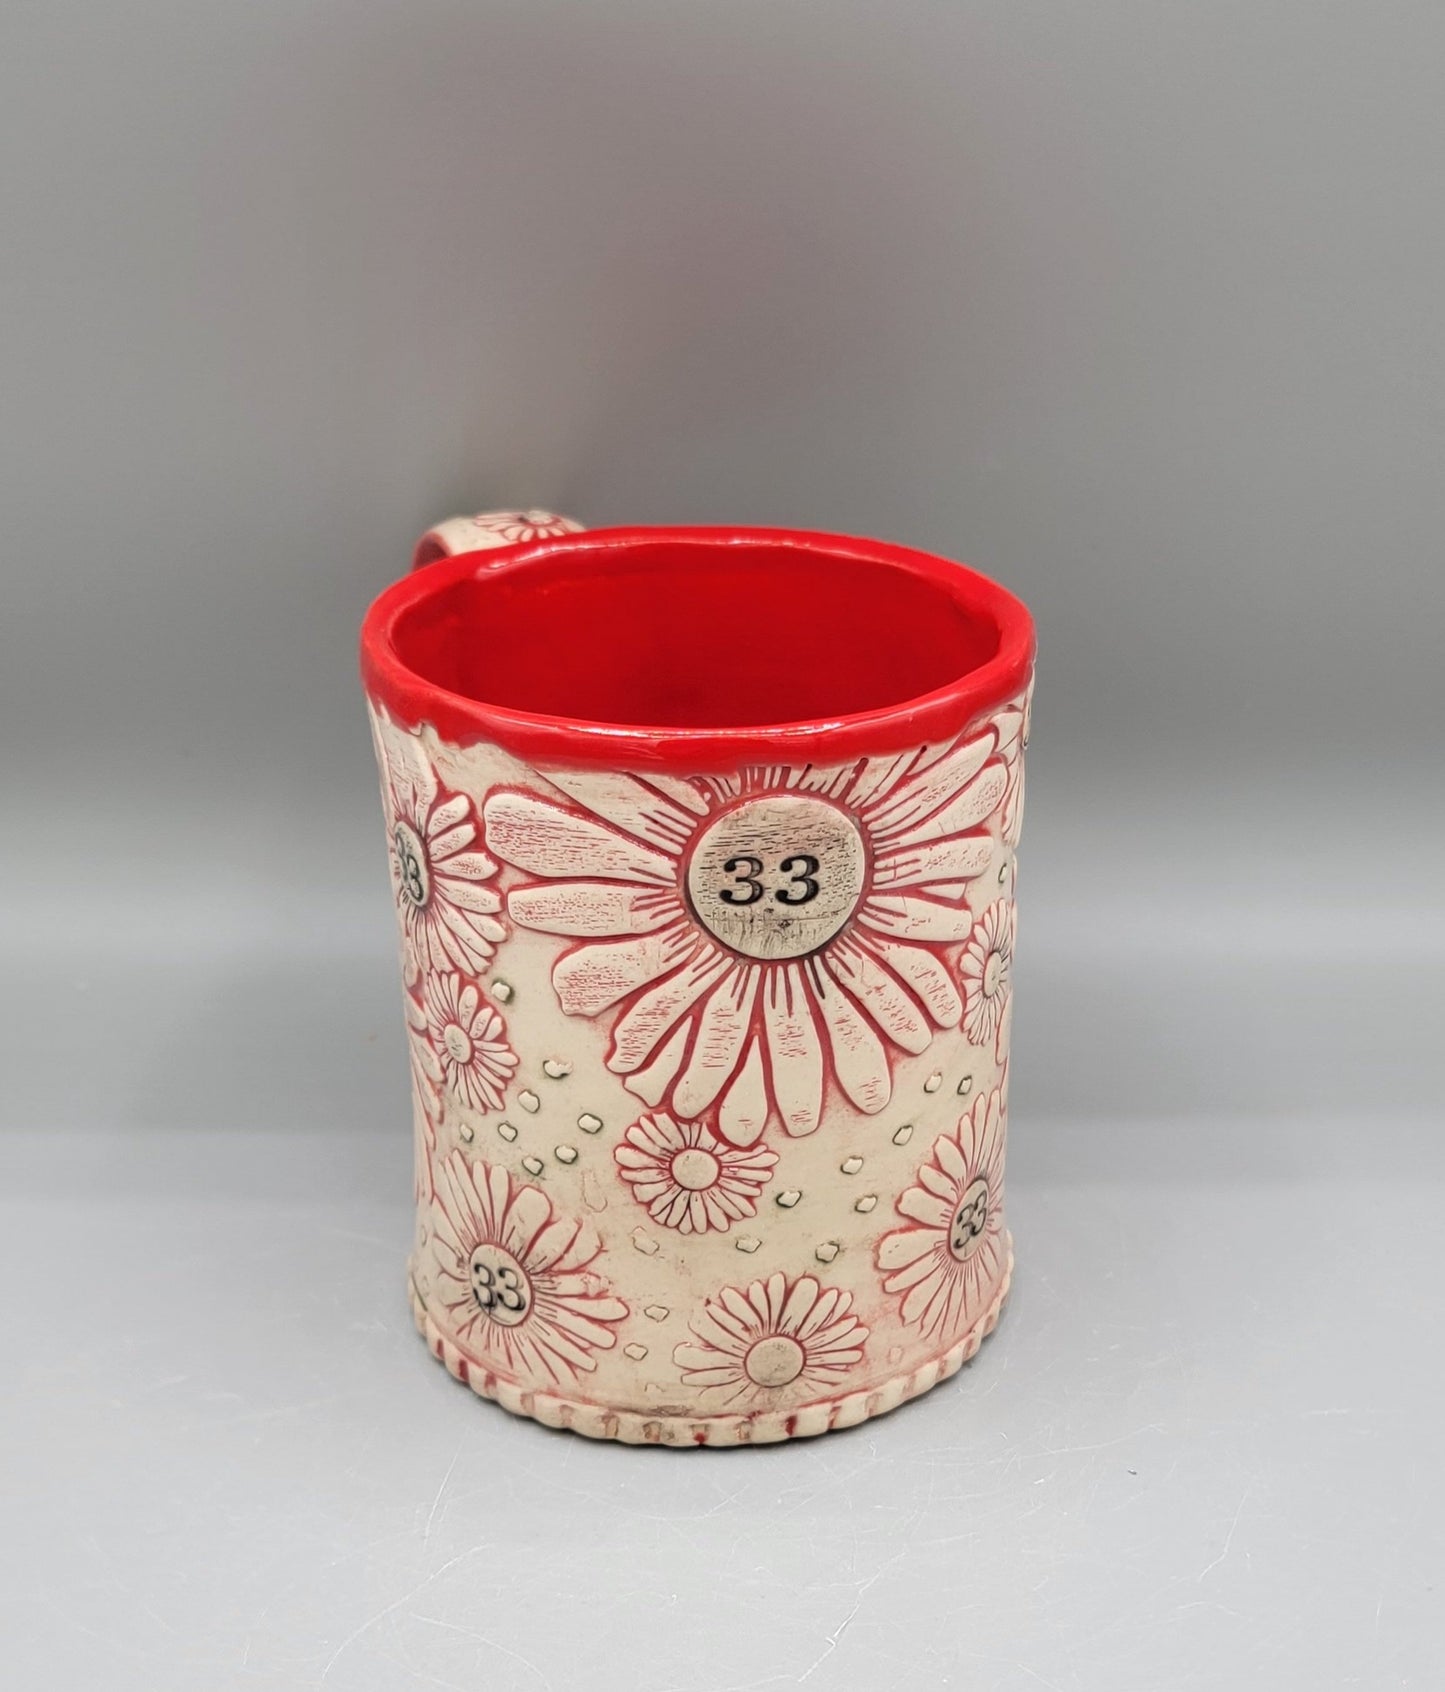 14-15oz Hand Painted, Embossed BMFS Red Daisies Ceramic Mug